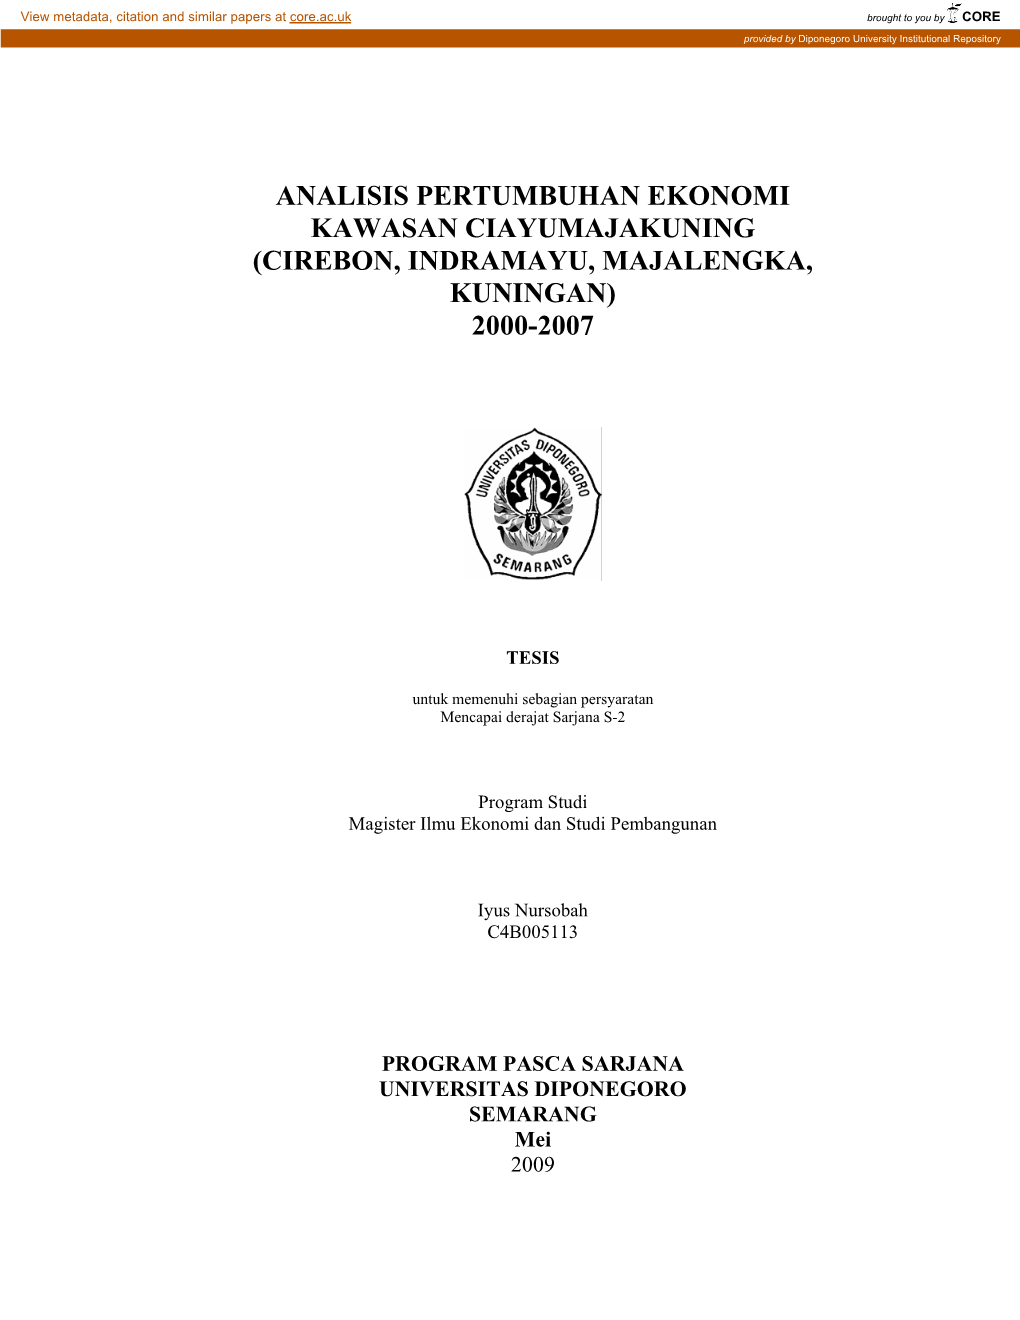 Analisis Pertumbuhan Ekonomi Kawasan Ciayumajakuning (Cirebon, Indramayu, Majalengka, Kuningan) 2000-2007